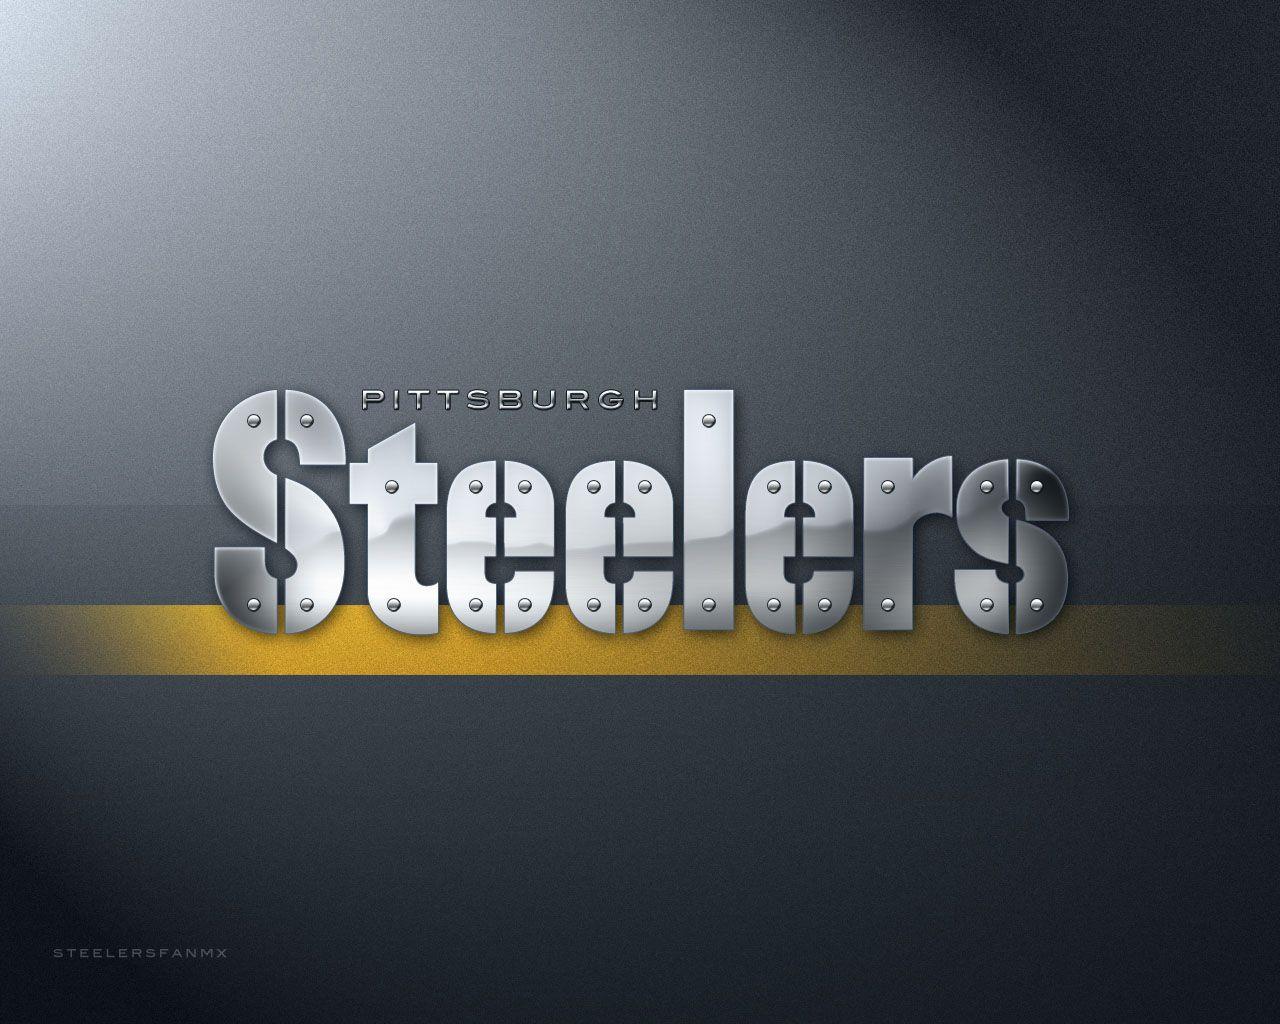 Pittsburgh Steelers wallpapers HD image